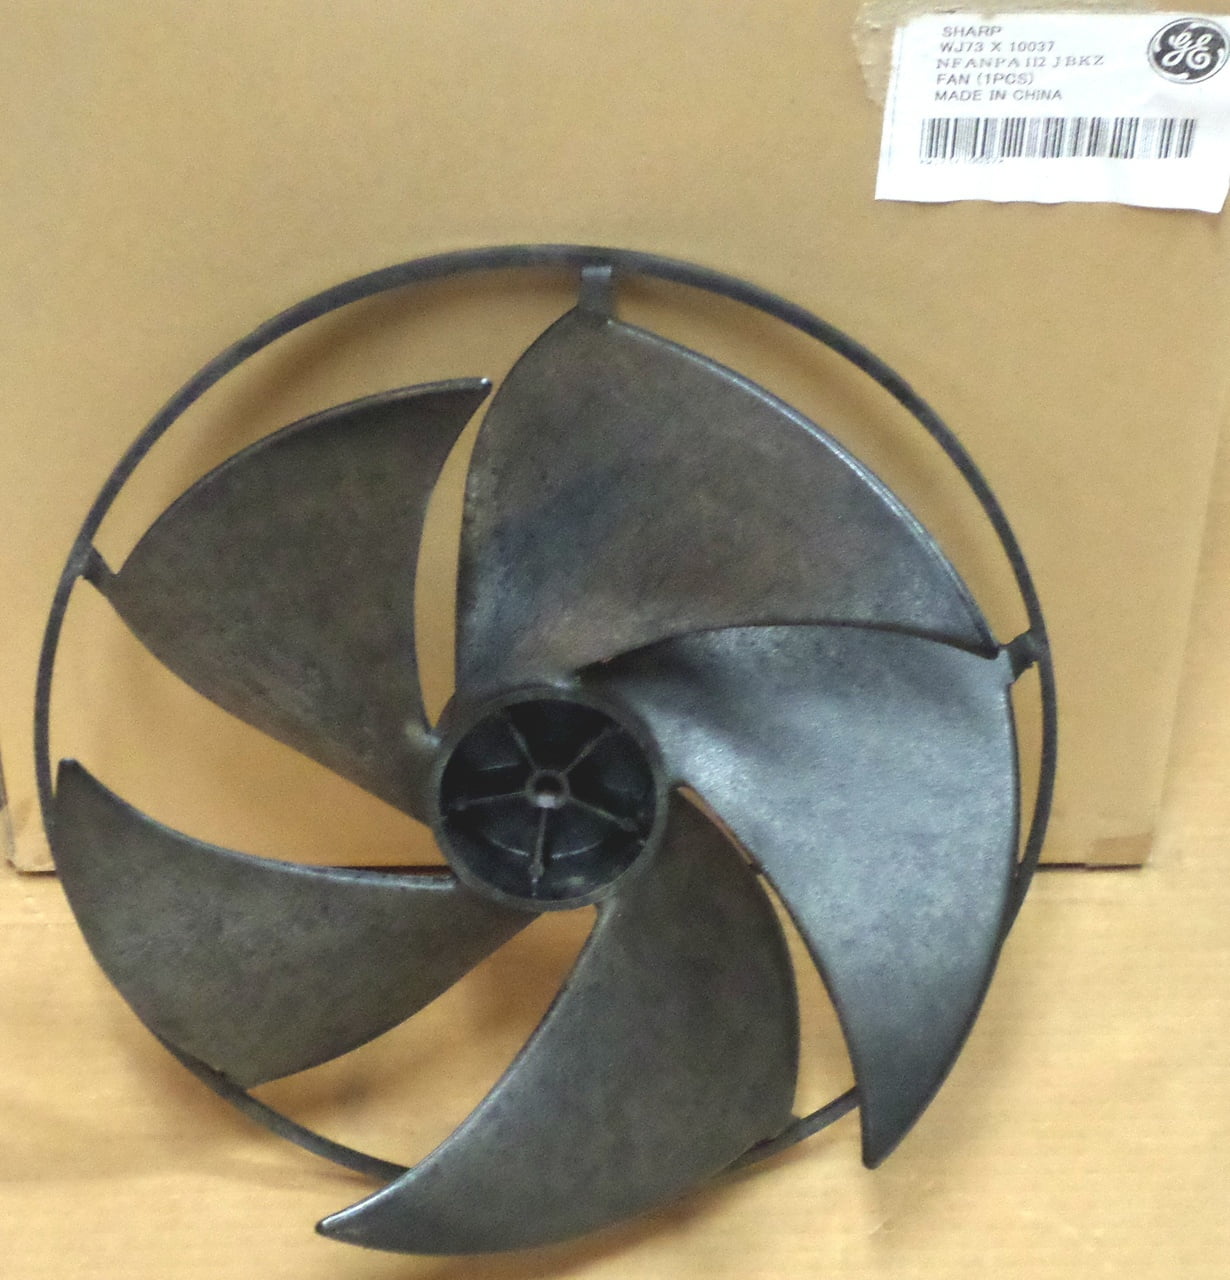 GE Air Conditioner Slinger Fan Blade Propellar WJ73X10037 ...